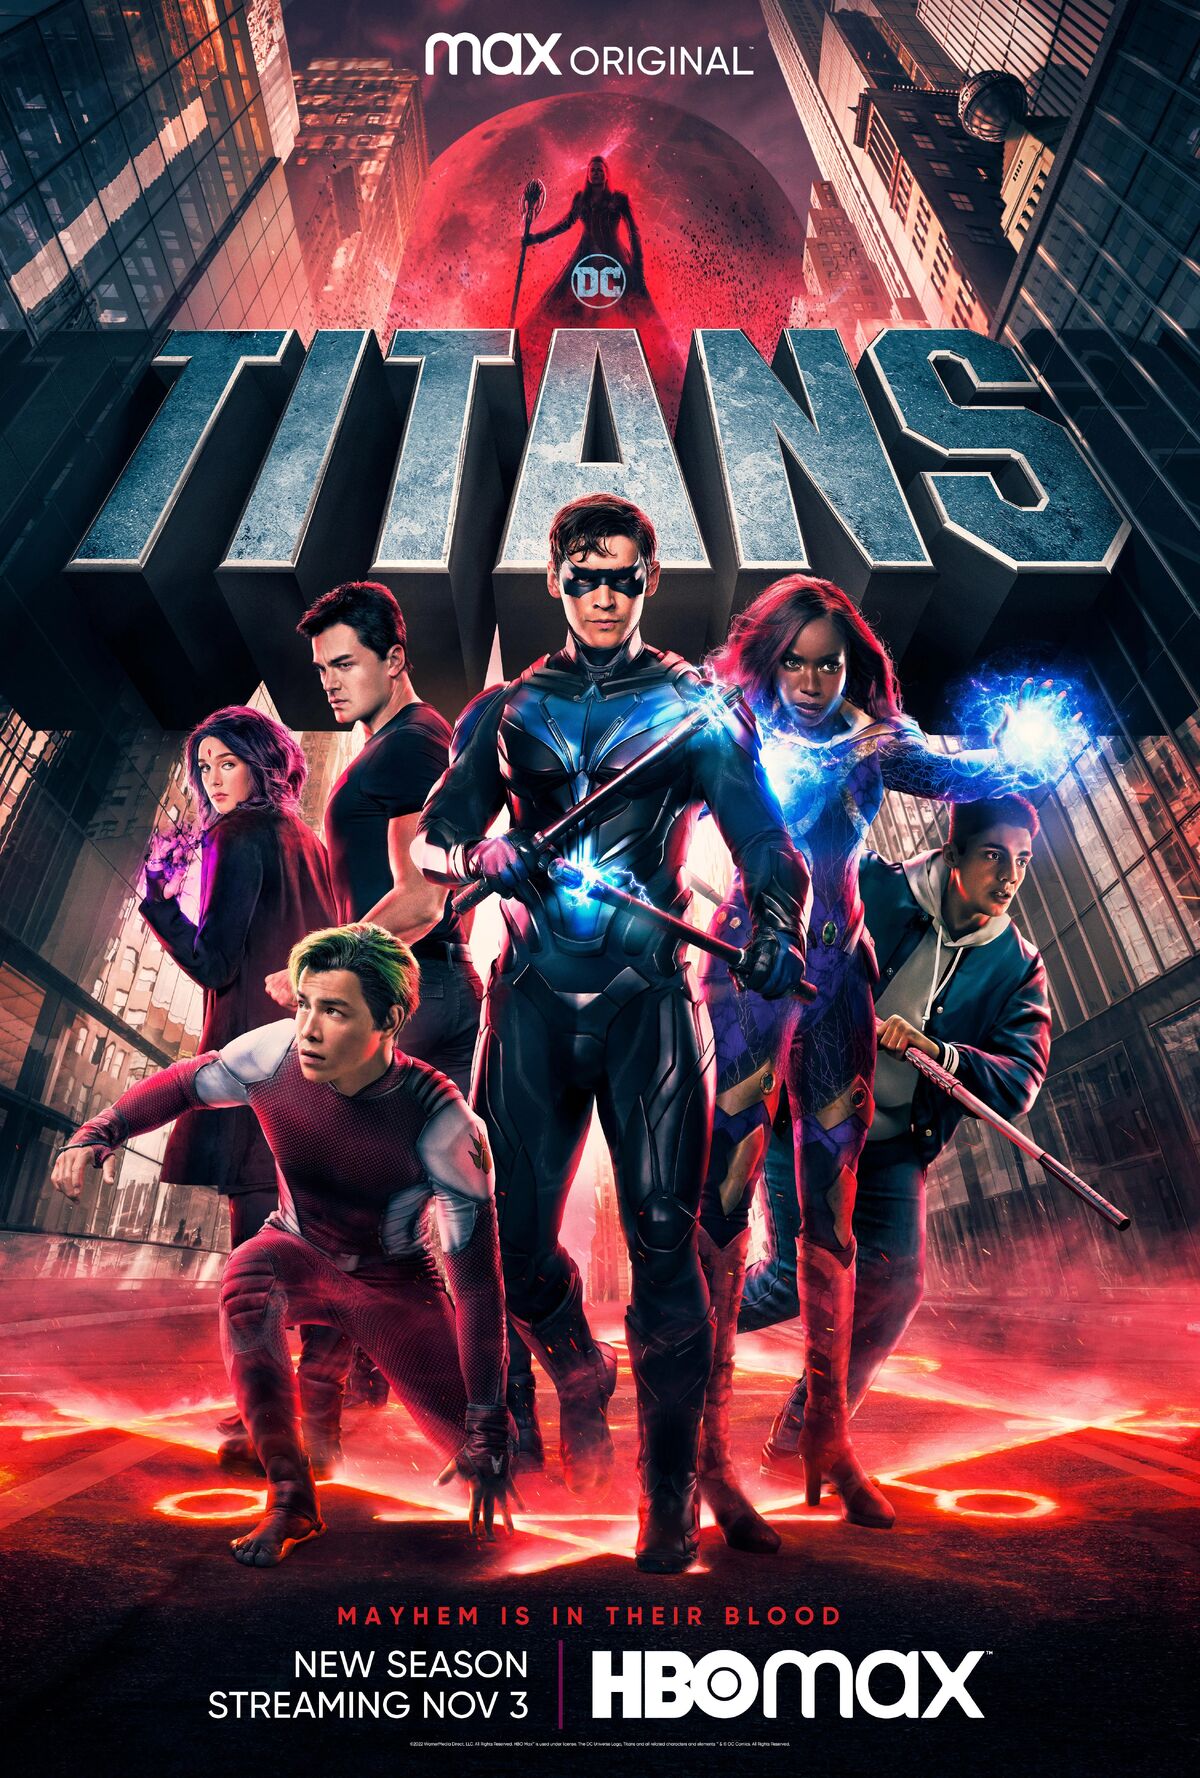 Titans Temporada 3 - Trailer 2 Legendado 